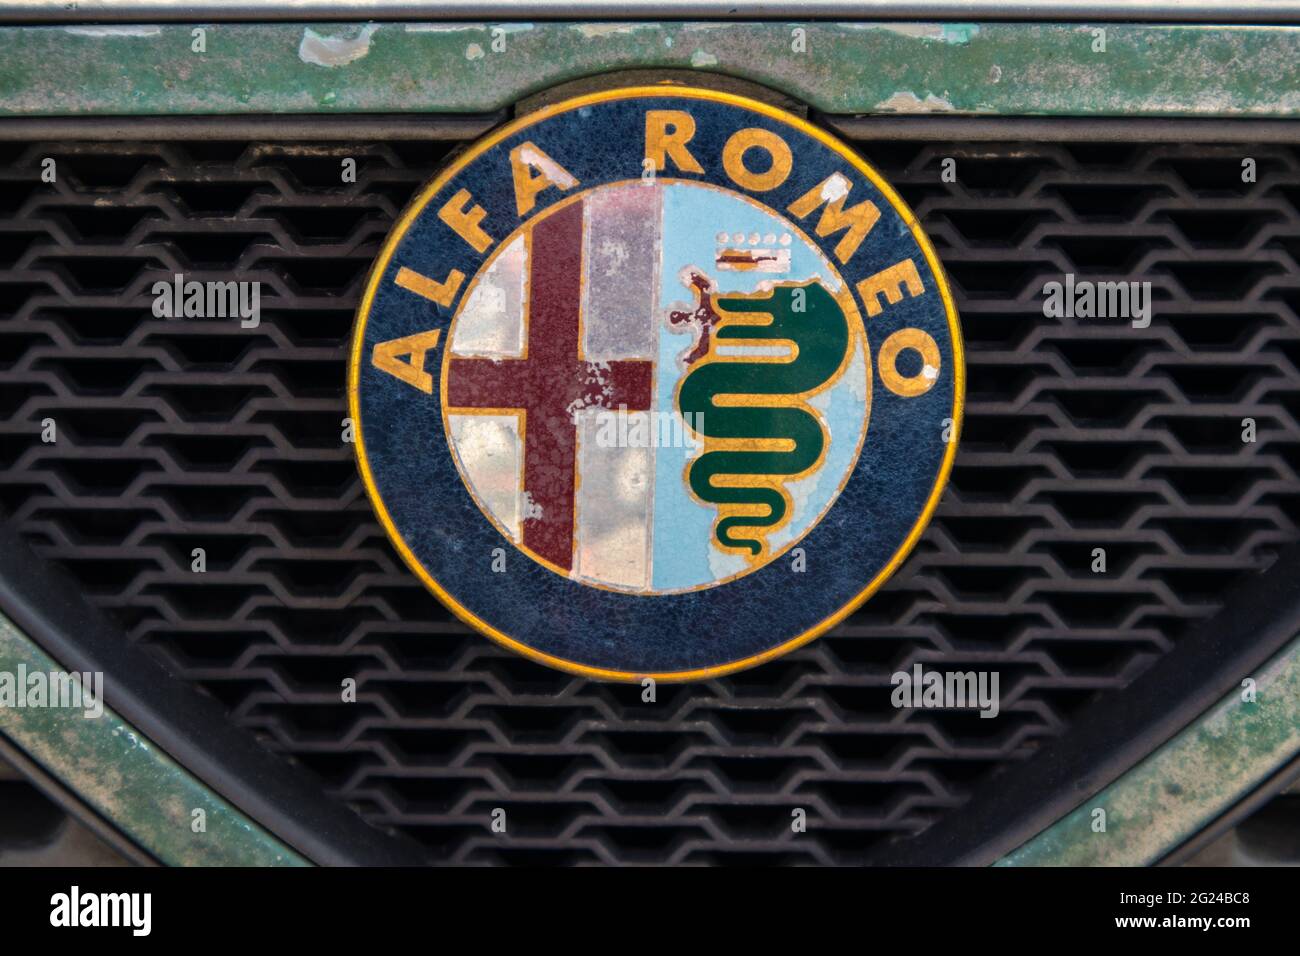 The Alfa Romeo logo on an old rusty fender. Stock Photo